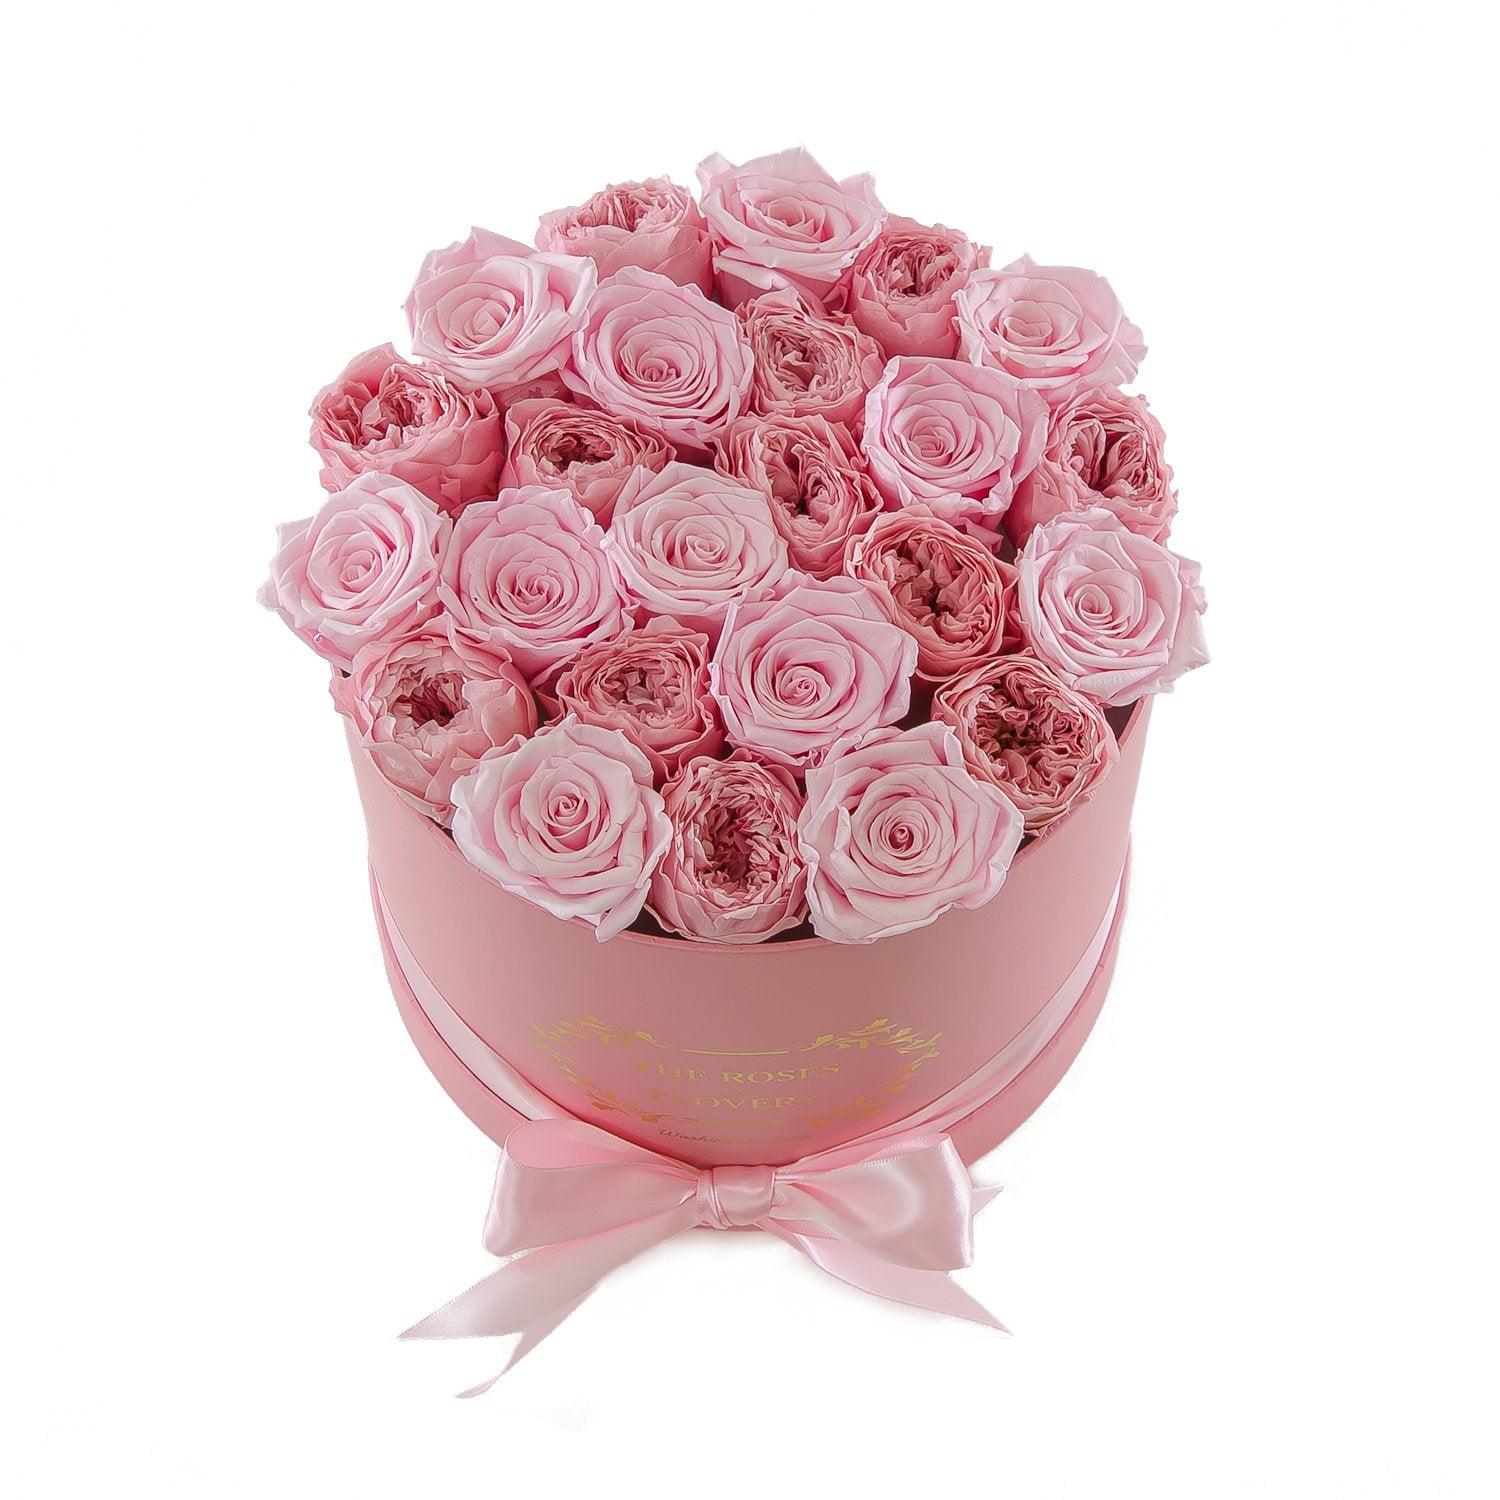 Medium Round Pink Box Pink Rose - Flovery